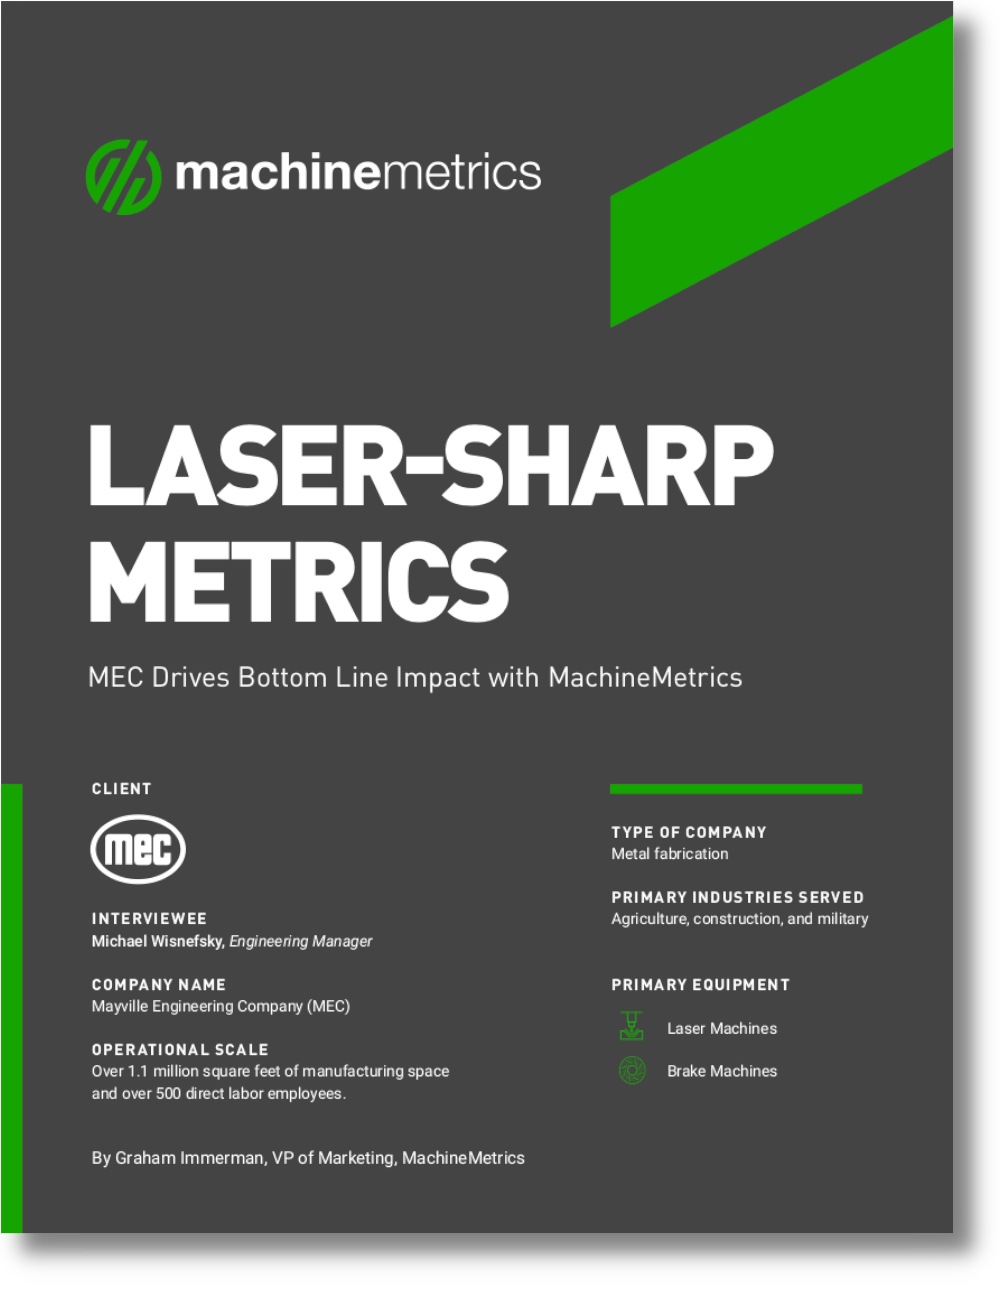 Laser-Sharp Metrics: MEC Drives Bottom Line Impact with MachineMetrics